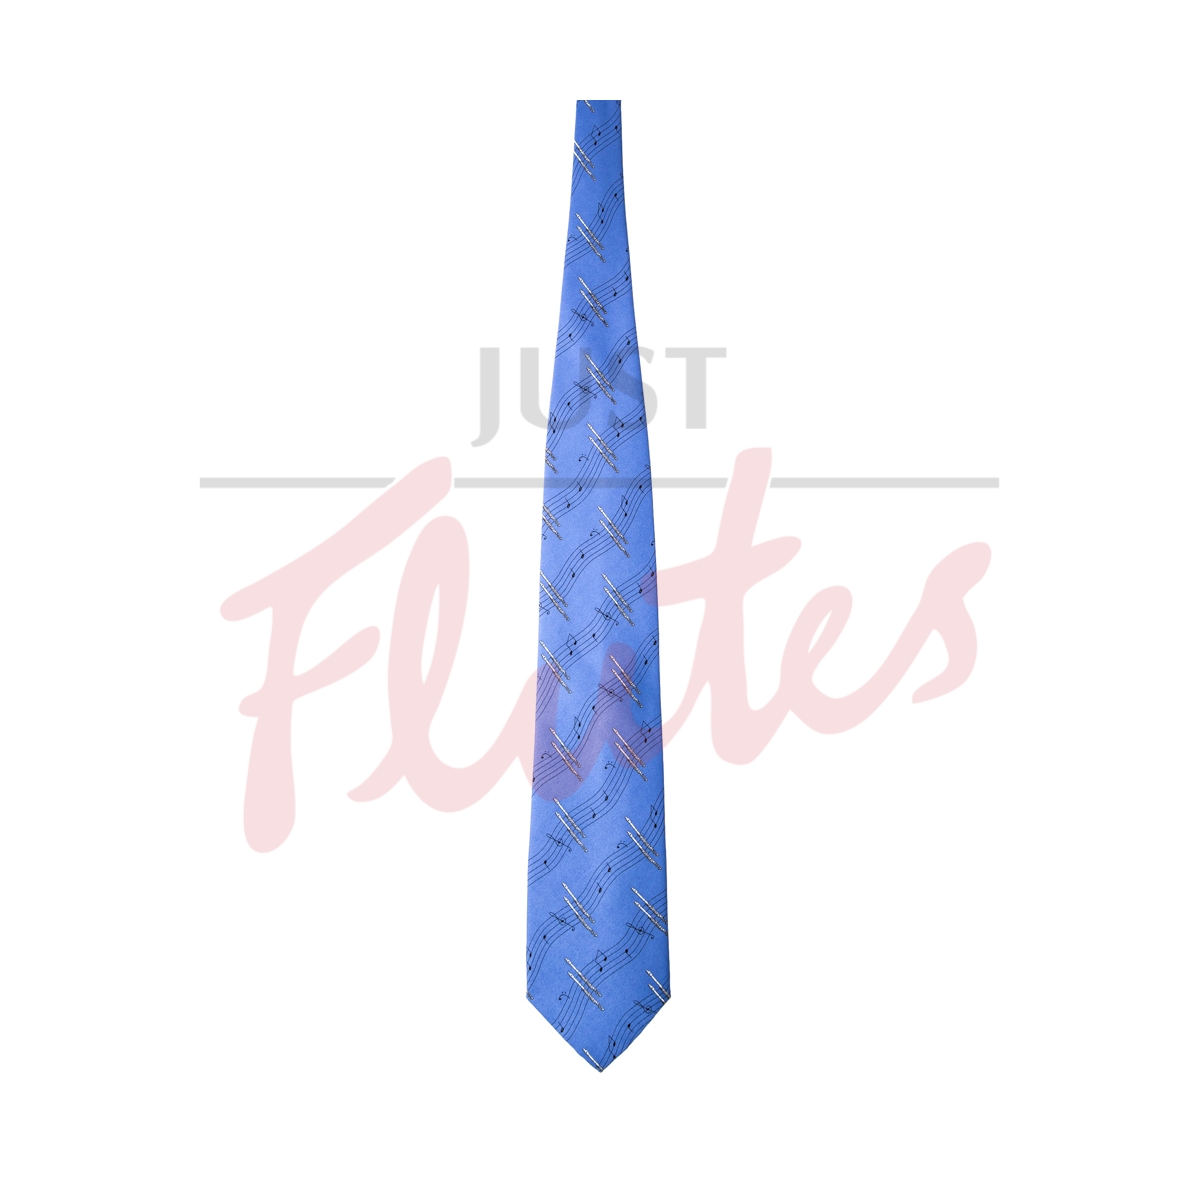 Flute and Manuscript Patterned Tie